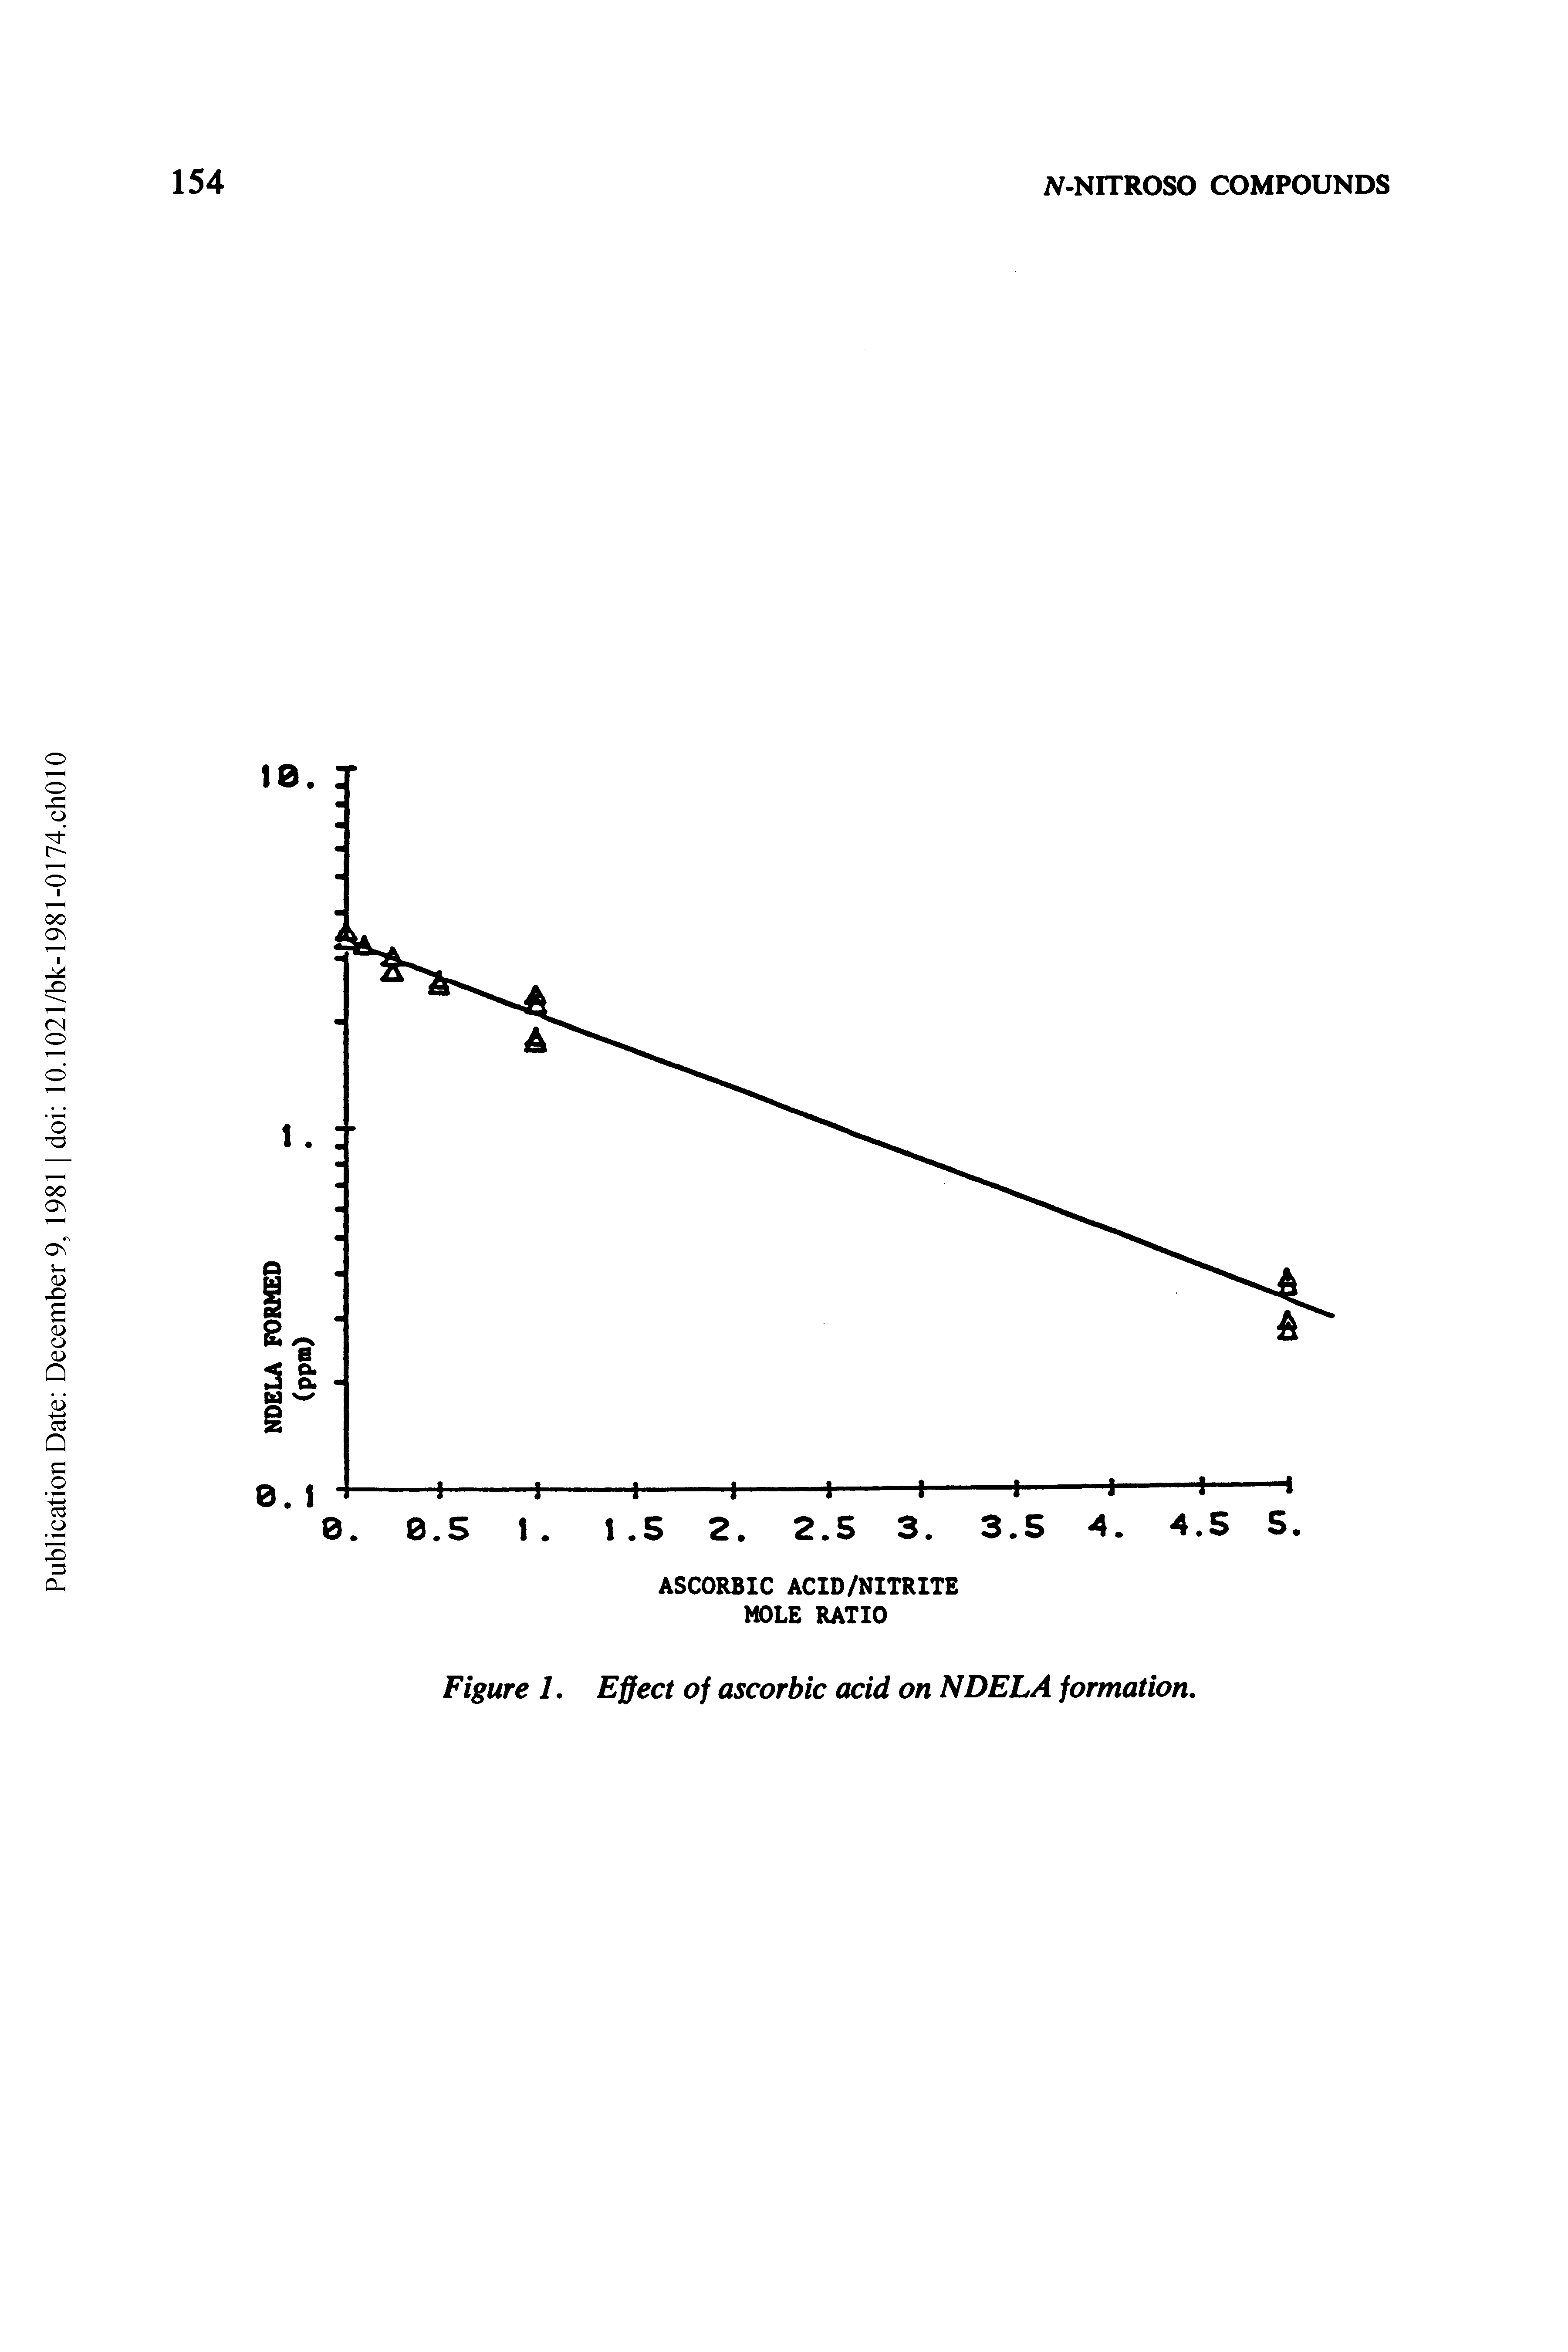 Figure L Effect of ascorbic acid on NDELA formation.